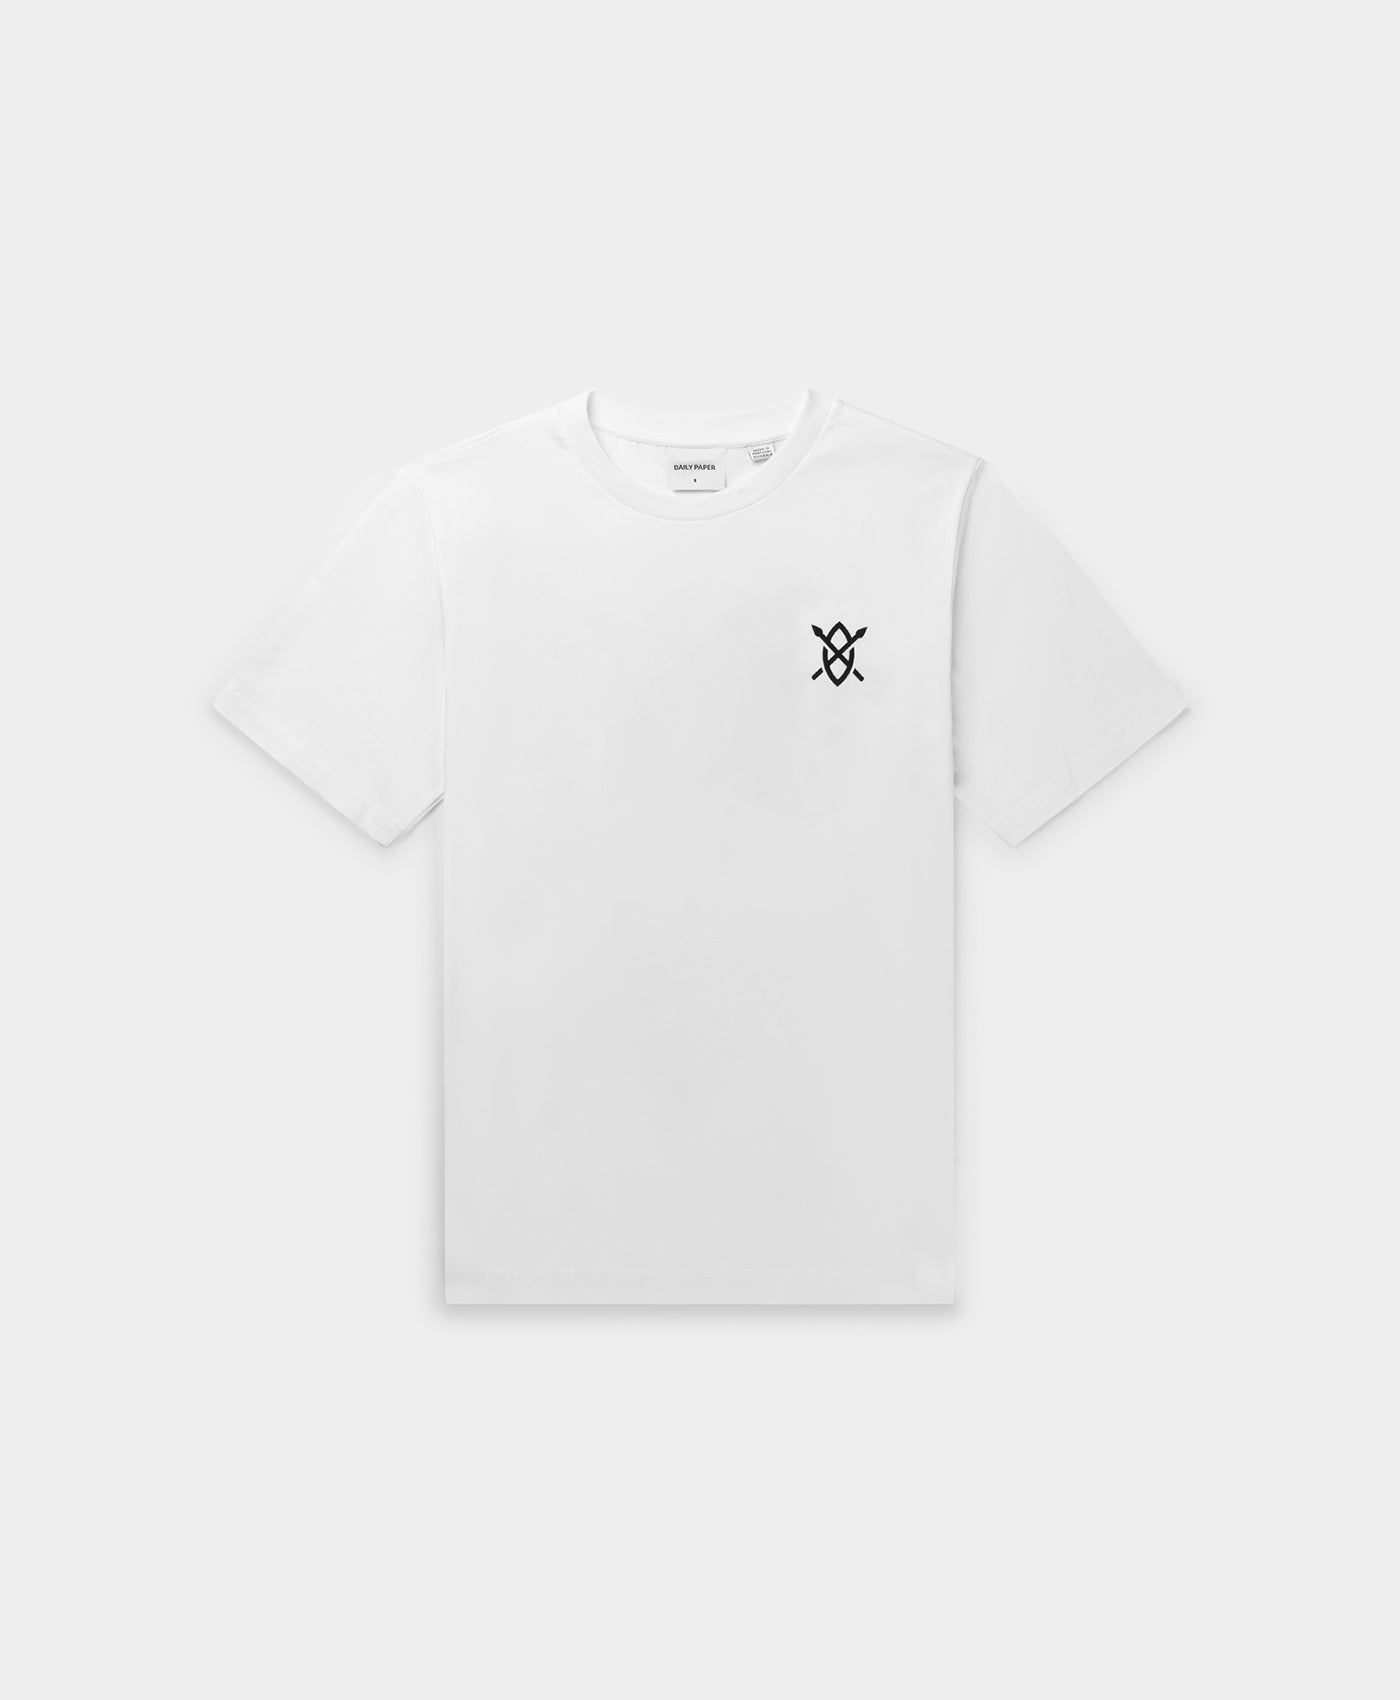 DP - White Amsterdam Flagship Store T-Shirt - Packshot - Rear